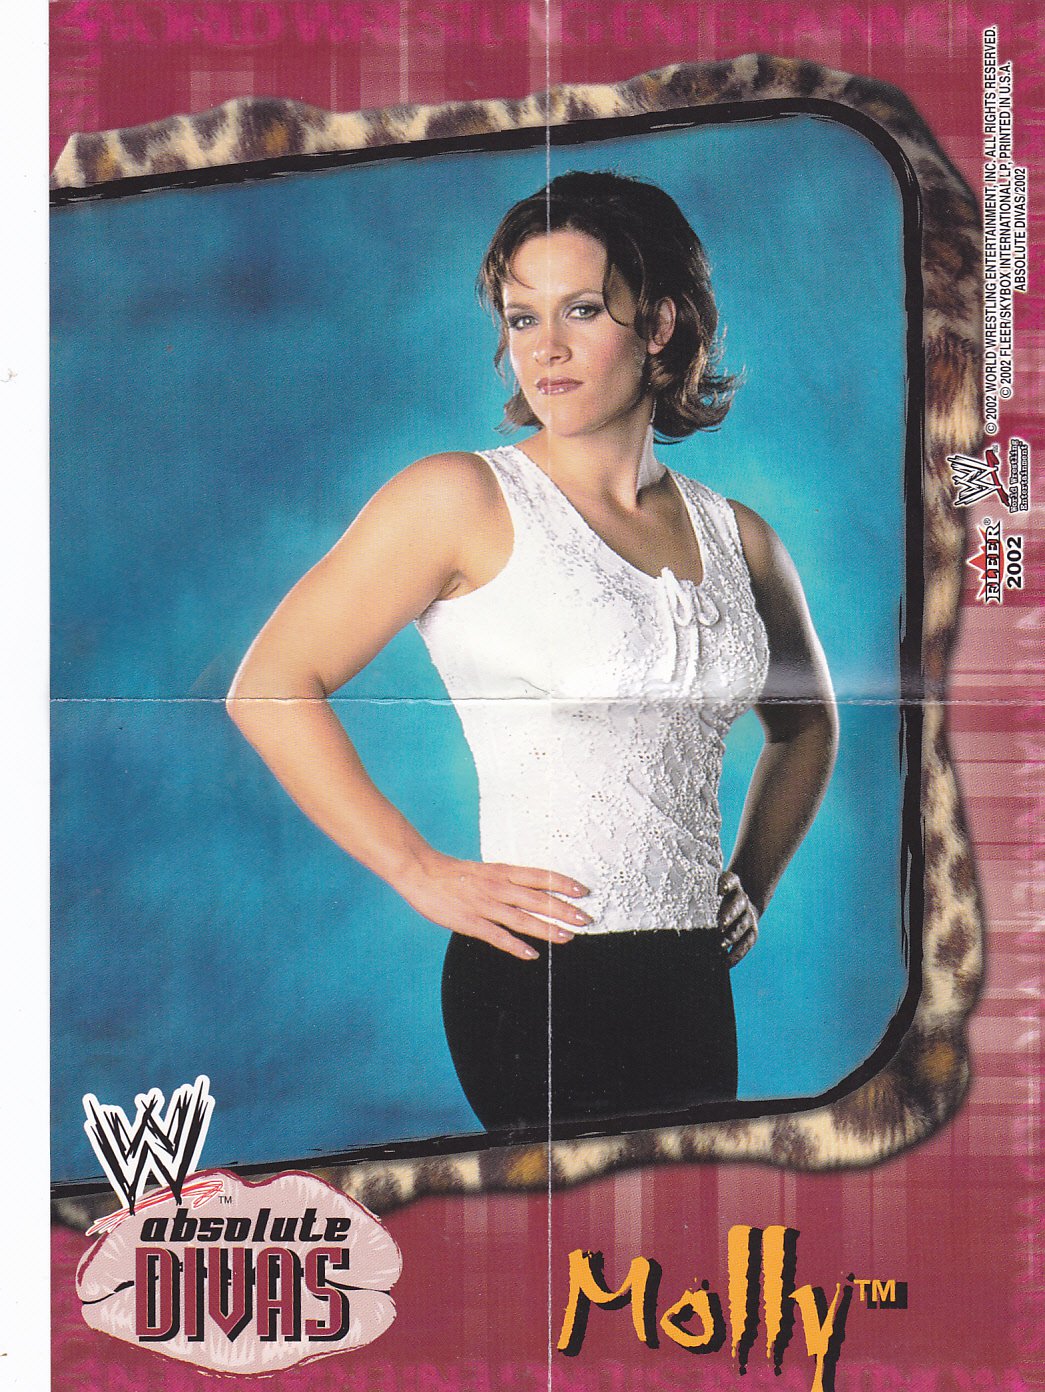 Molly - WWE Absolute Divas 2002 Wrestling Mini Poster